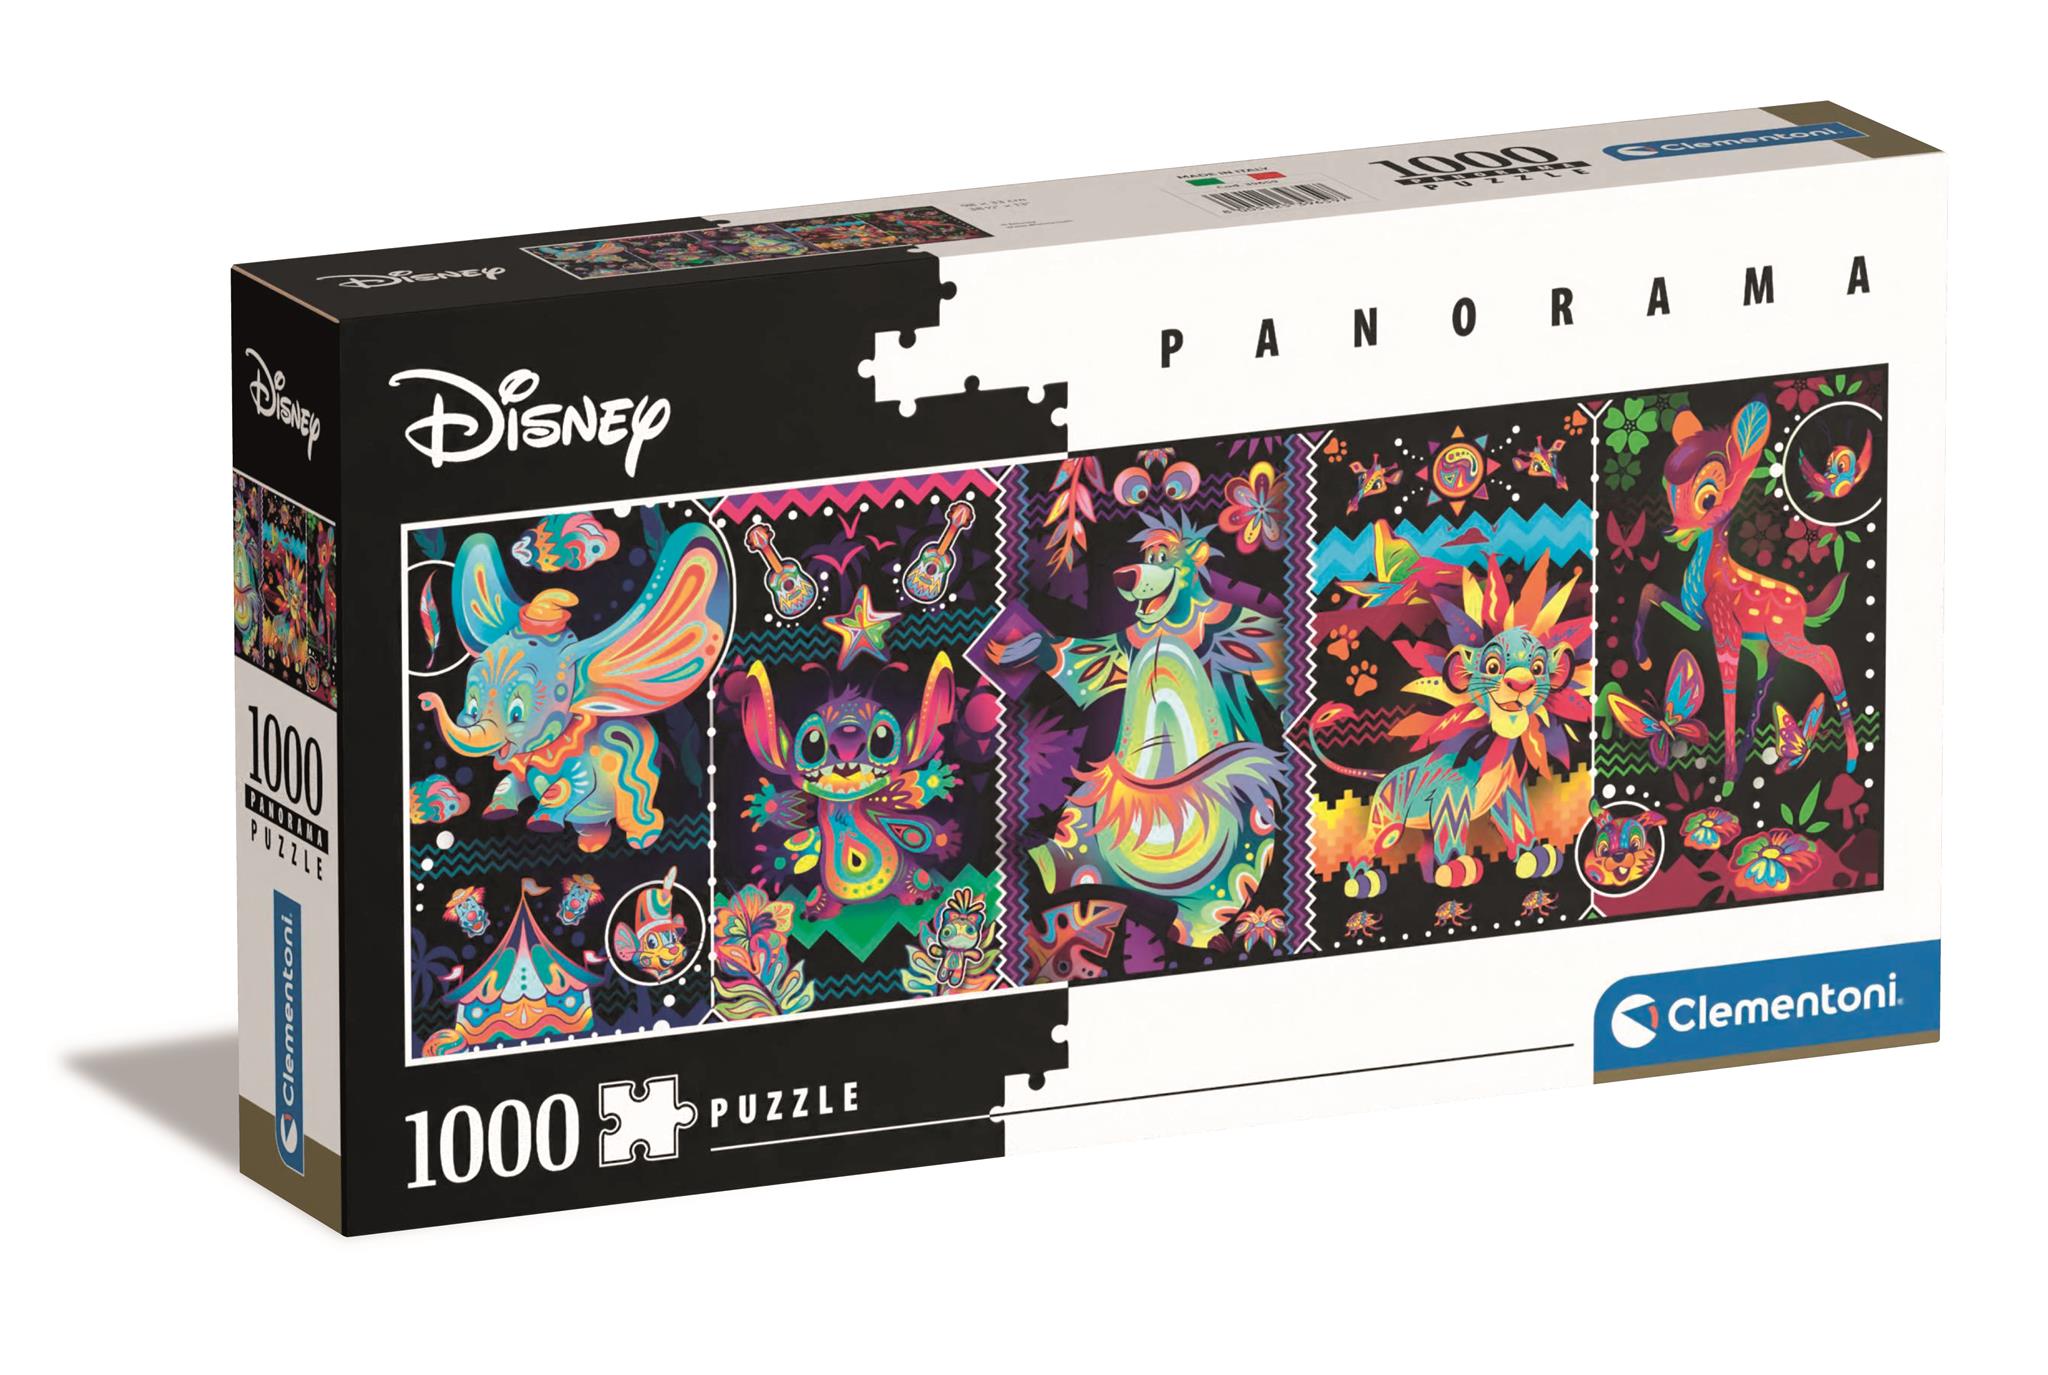 Clementoni - Panorama Puzzle 1000 pcs - Disney Classic (39659) - Leker